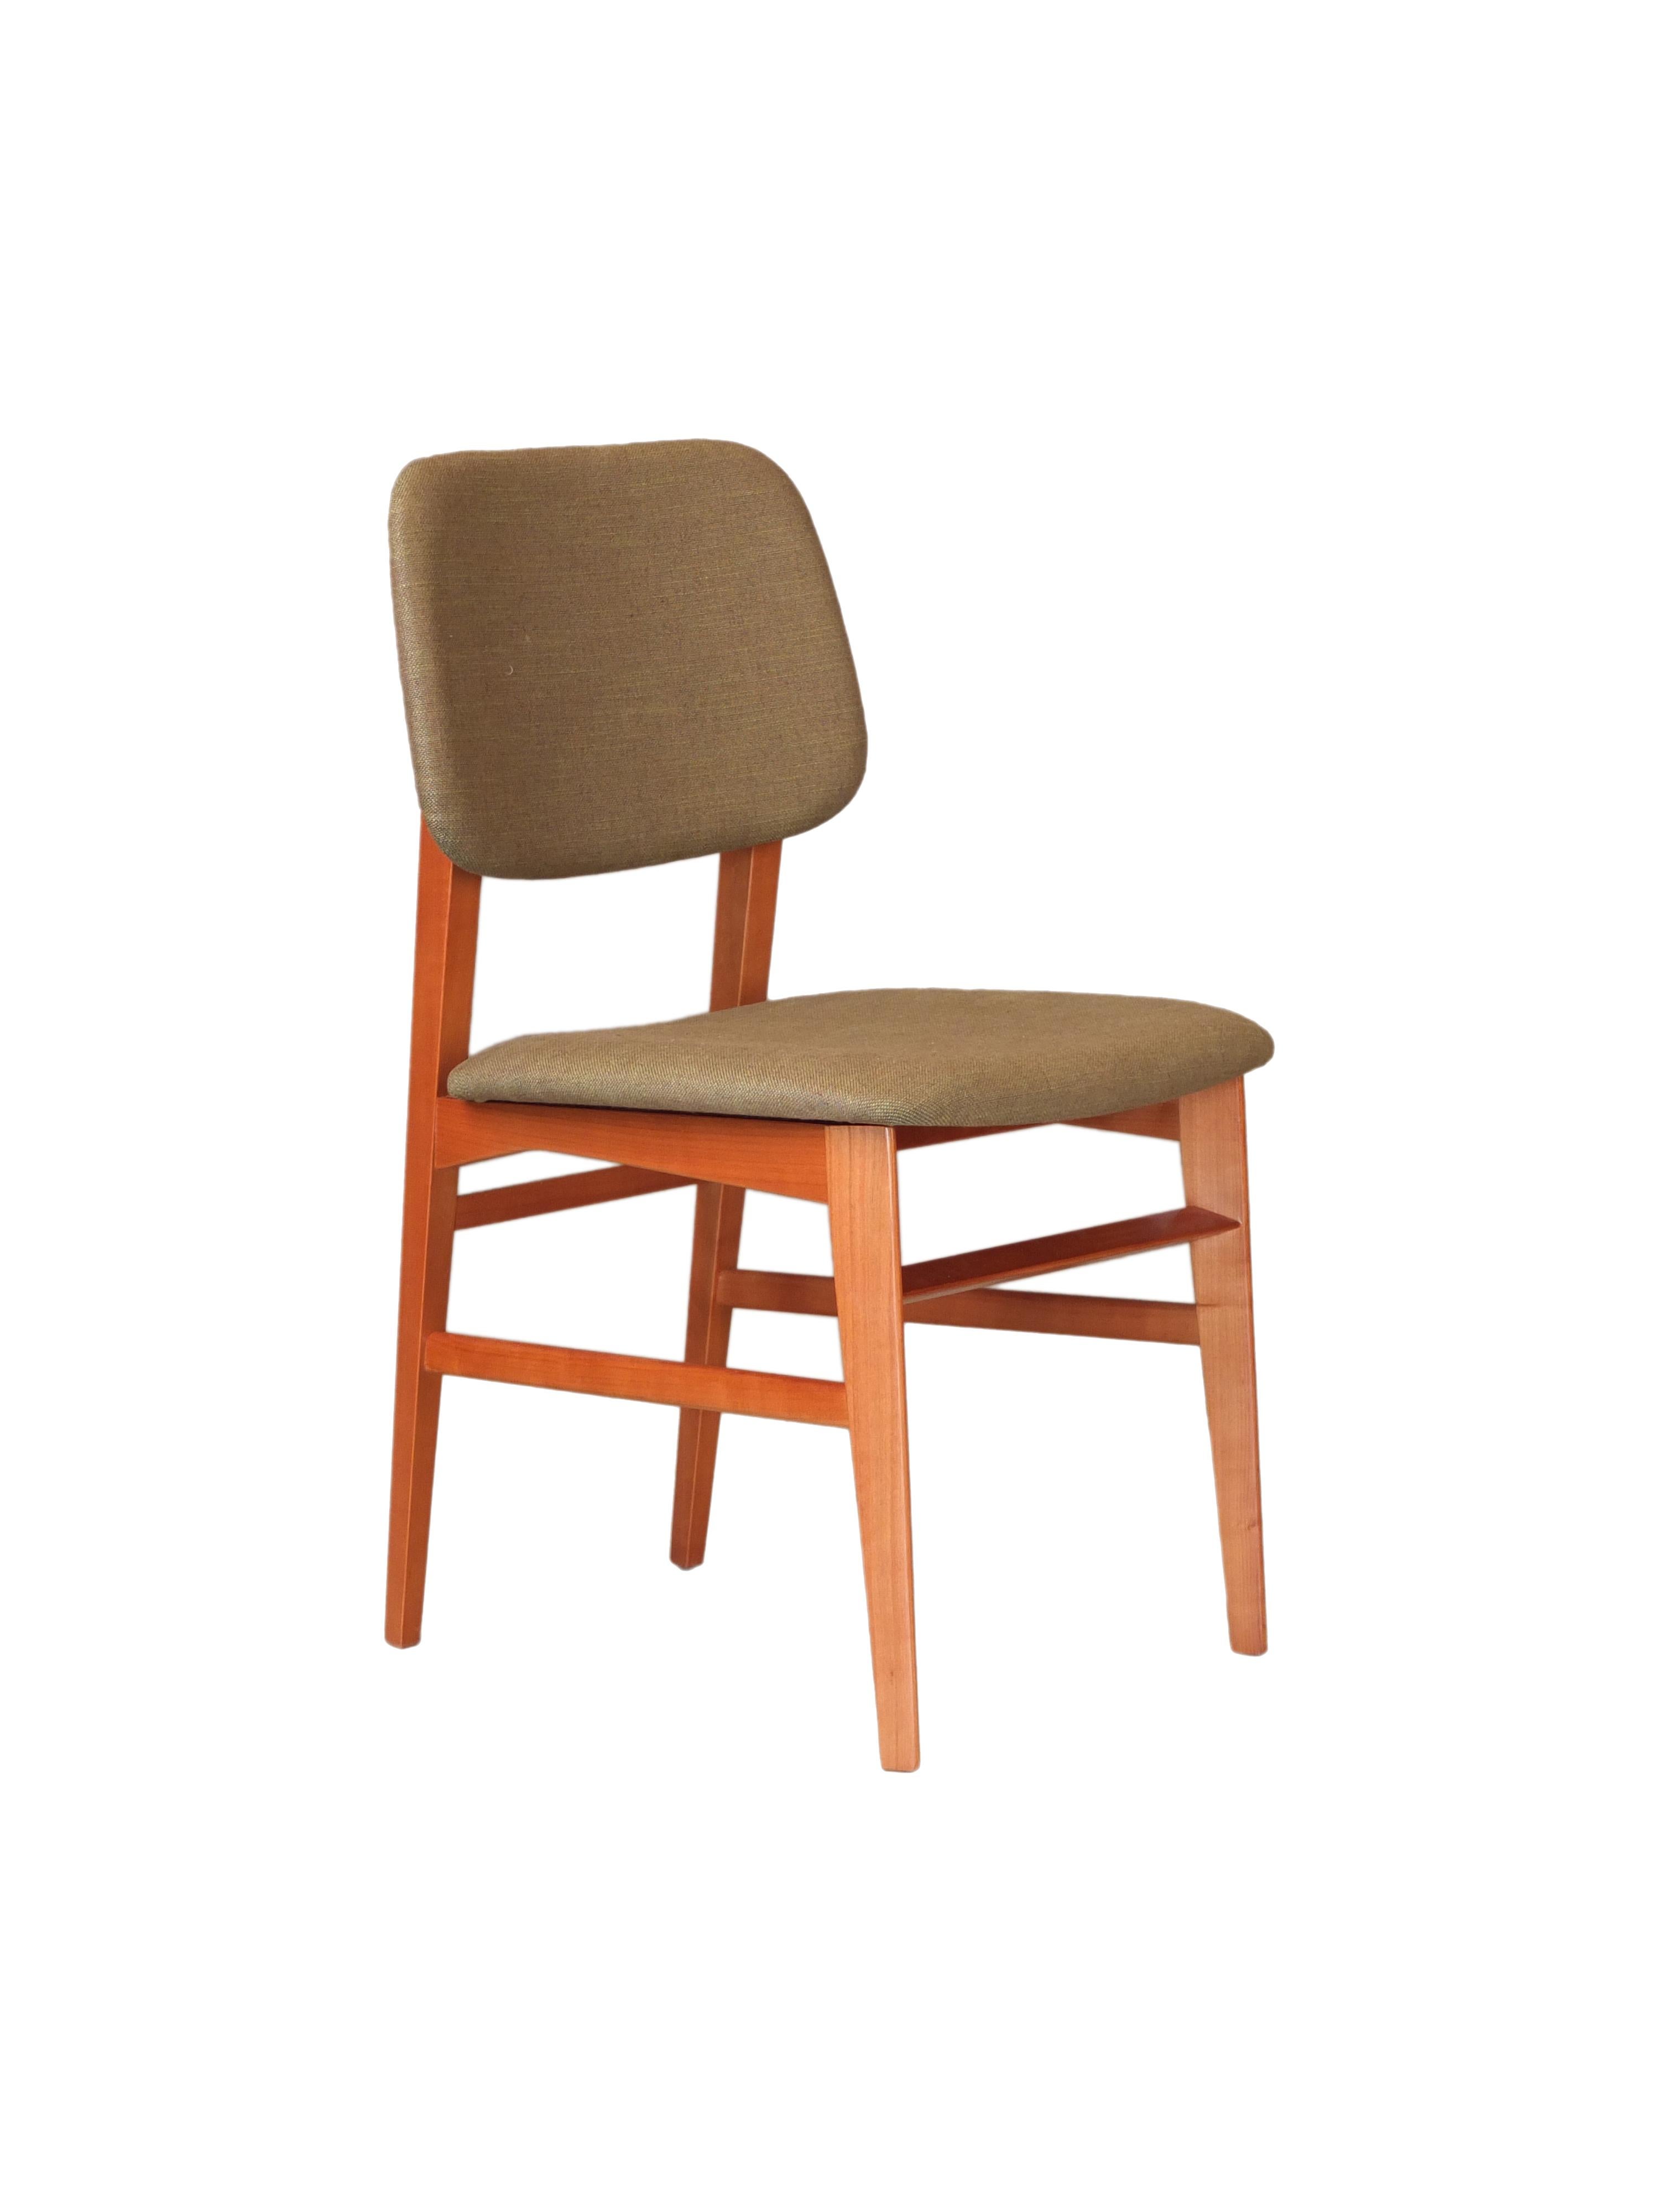 Italian Morelato, Savina Chair in Ash Wood